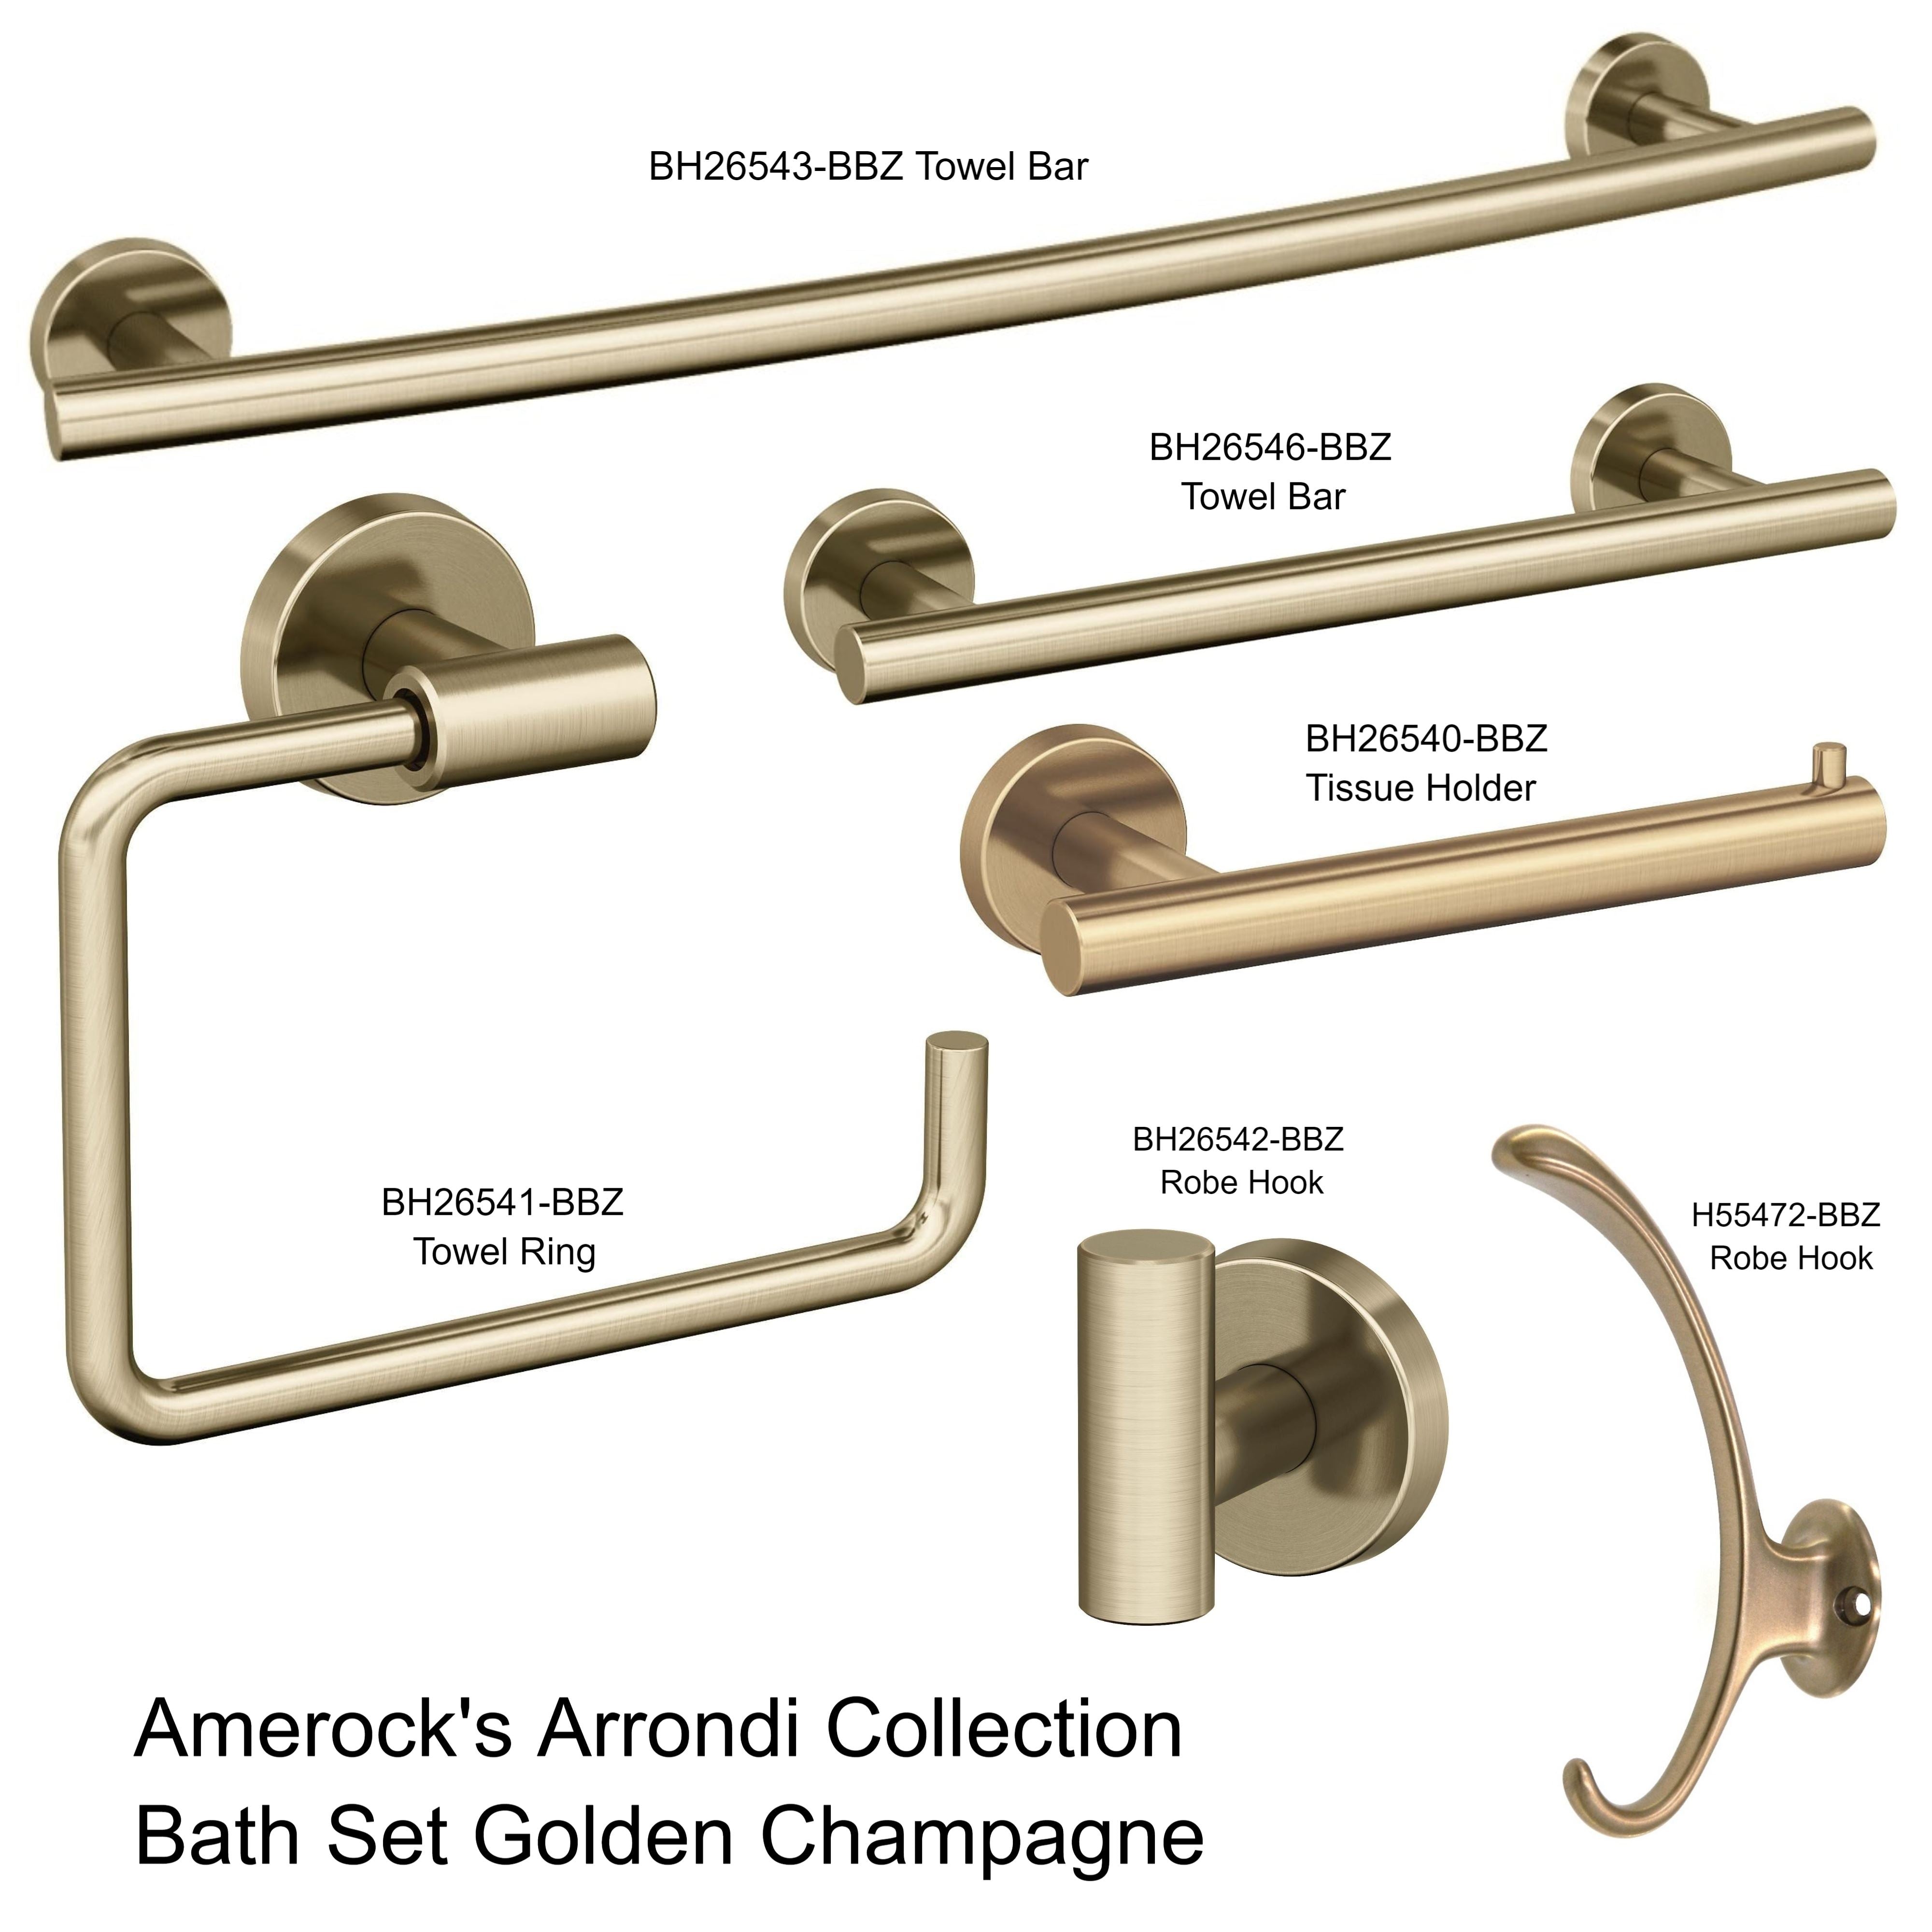 Amerock New Arrondi 5-Piece Bath Accessory Set Golden Champagne Towel Bars Ring TP Holder Hooks 